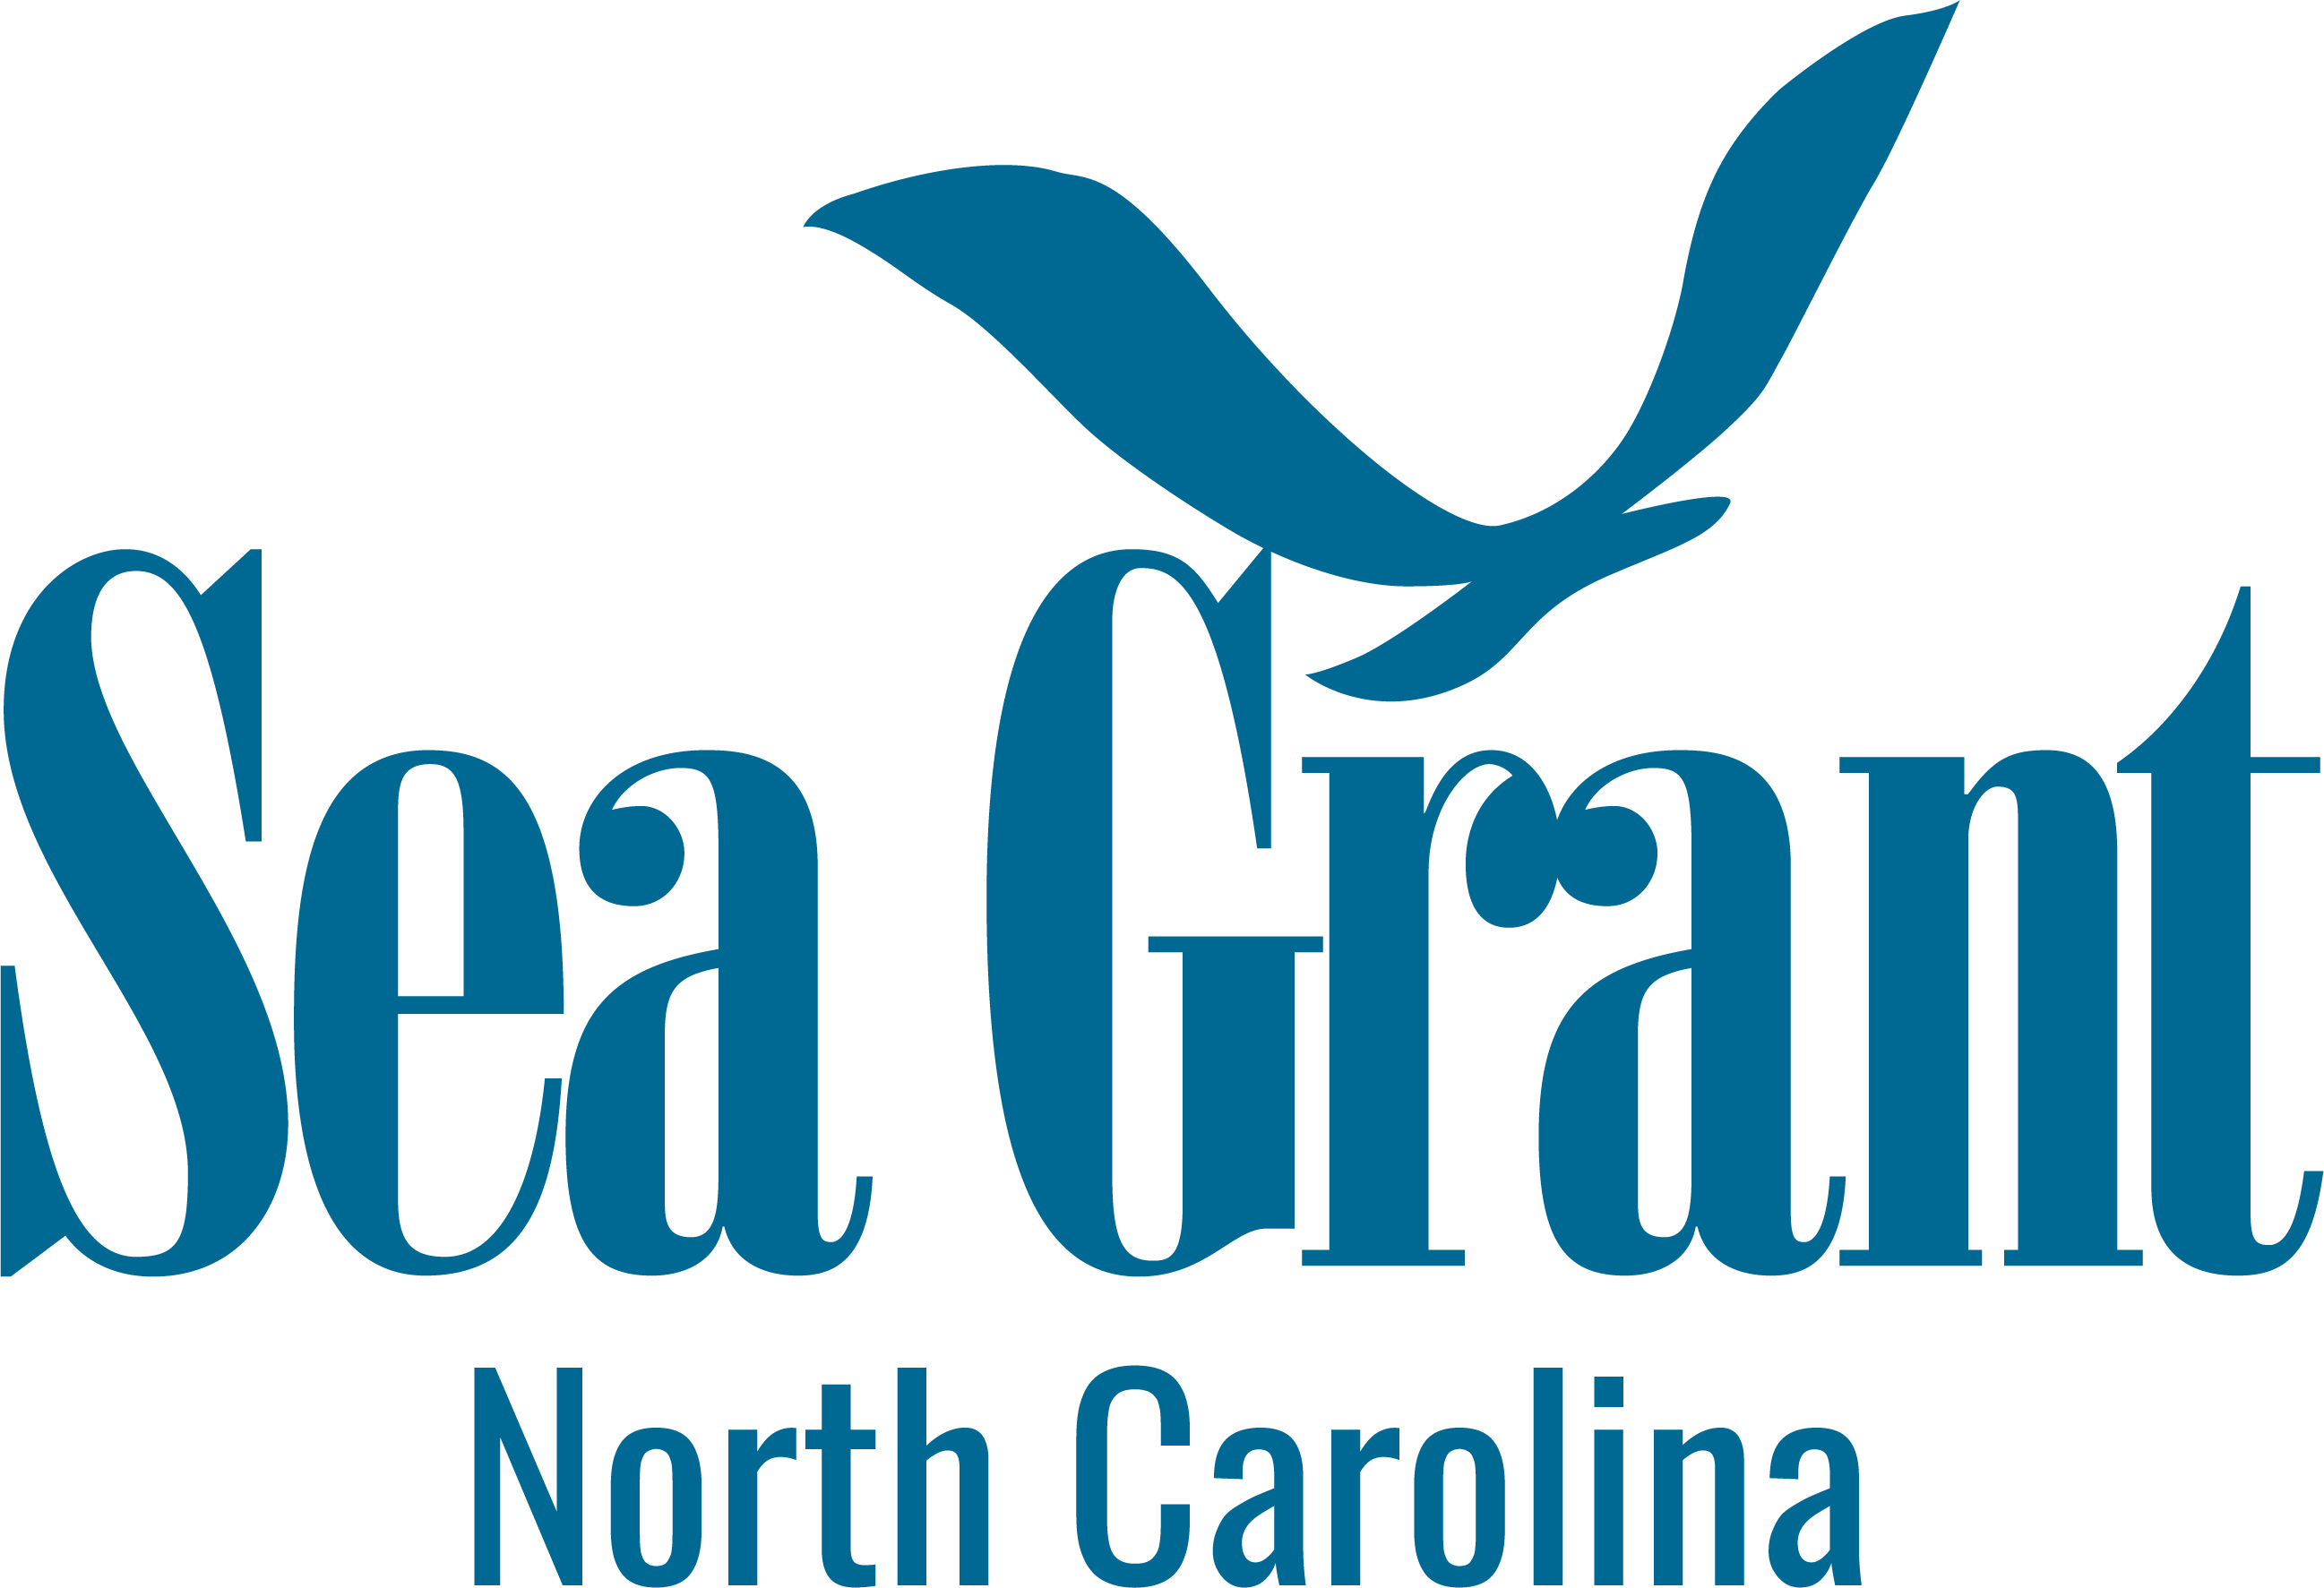 NC Sea Grant logo